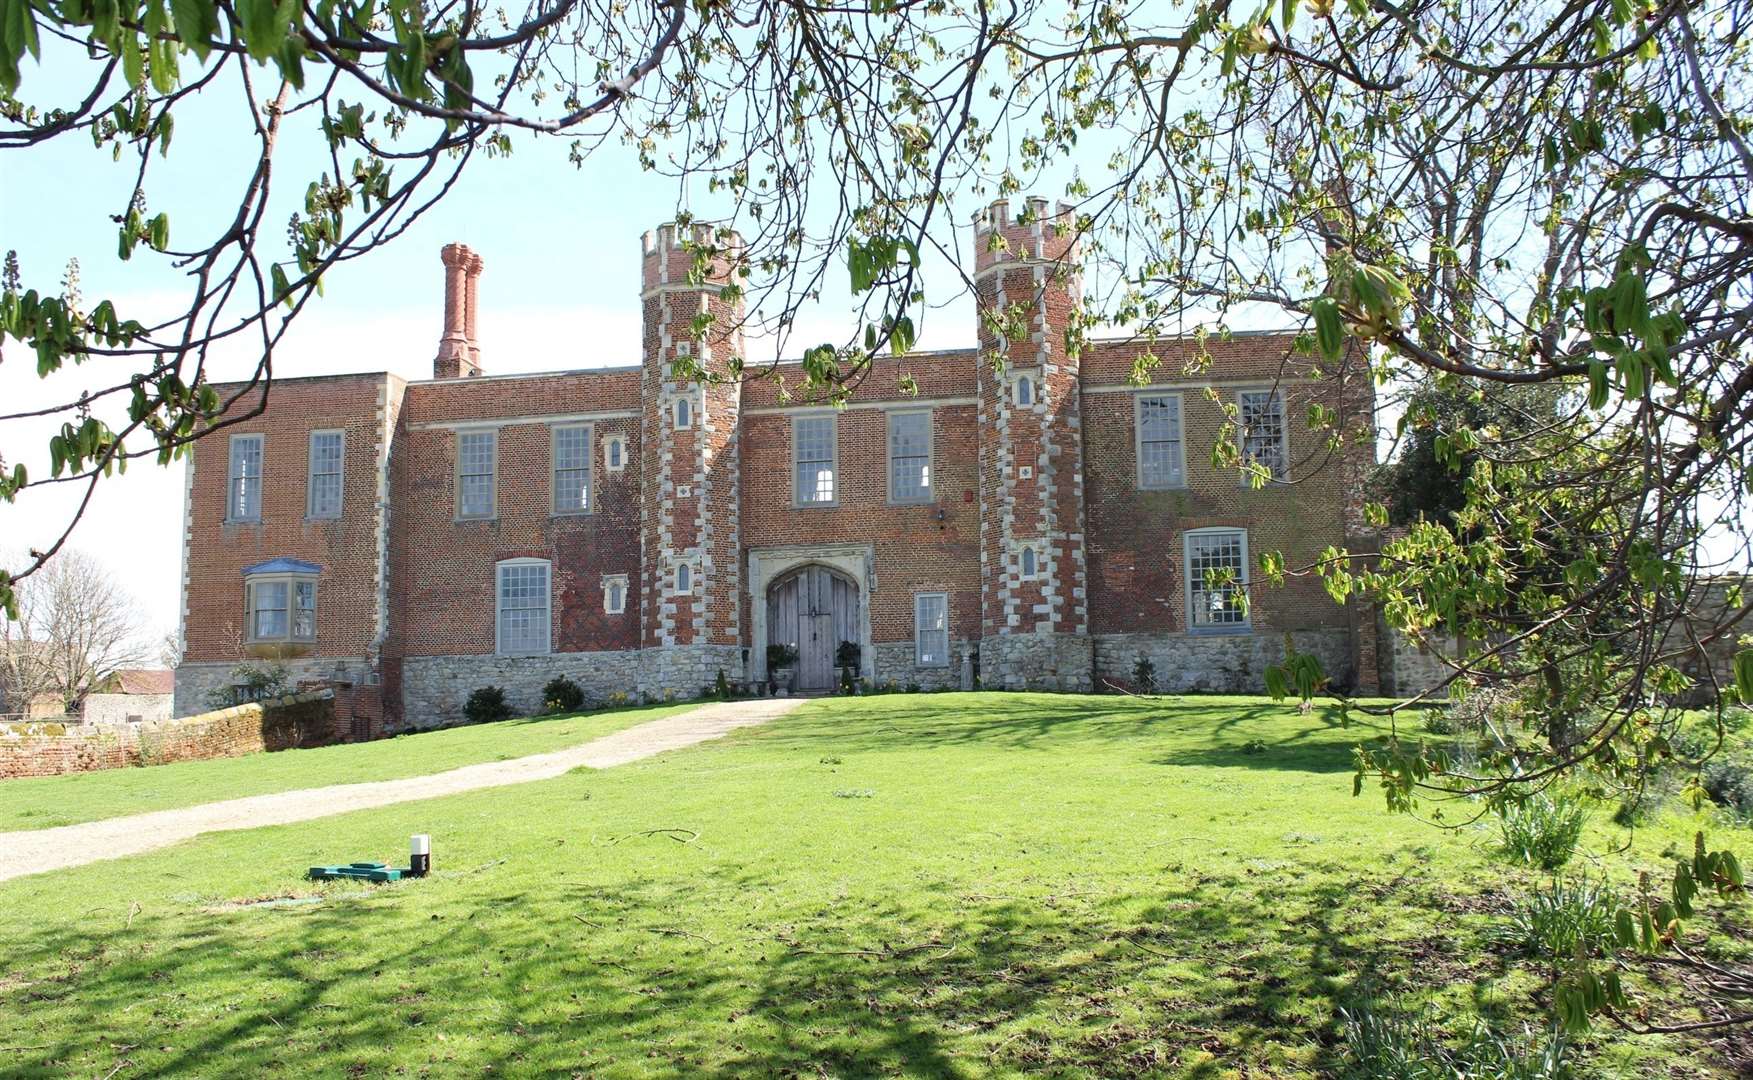 Tudor manor Shurland Hall at Eastchurch